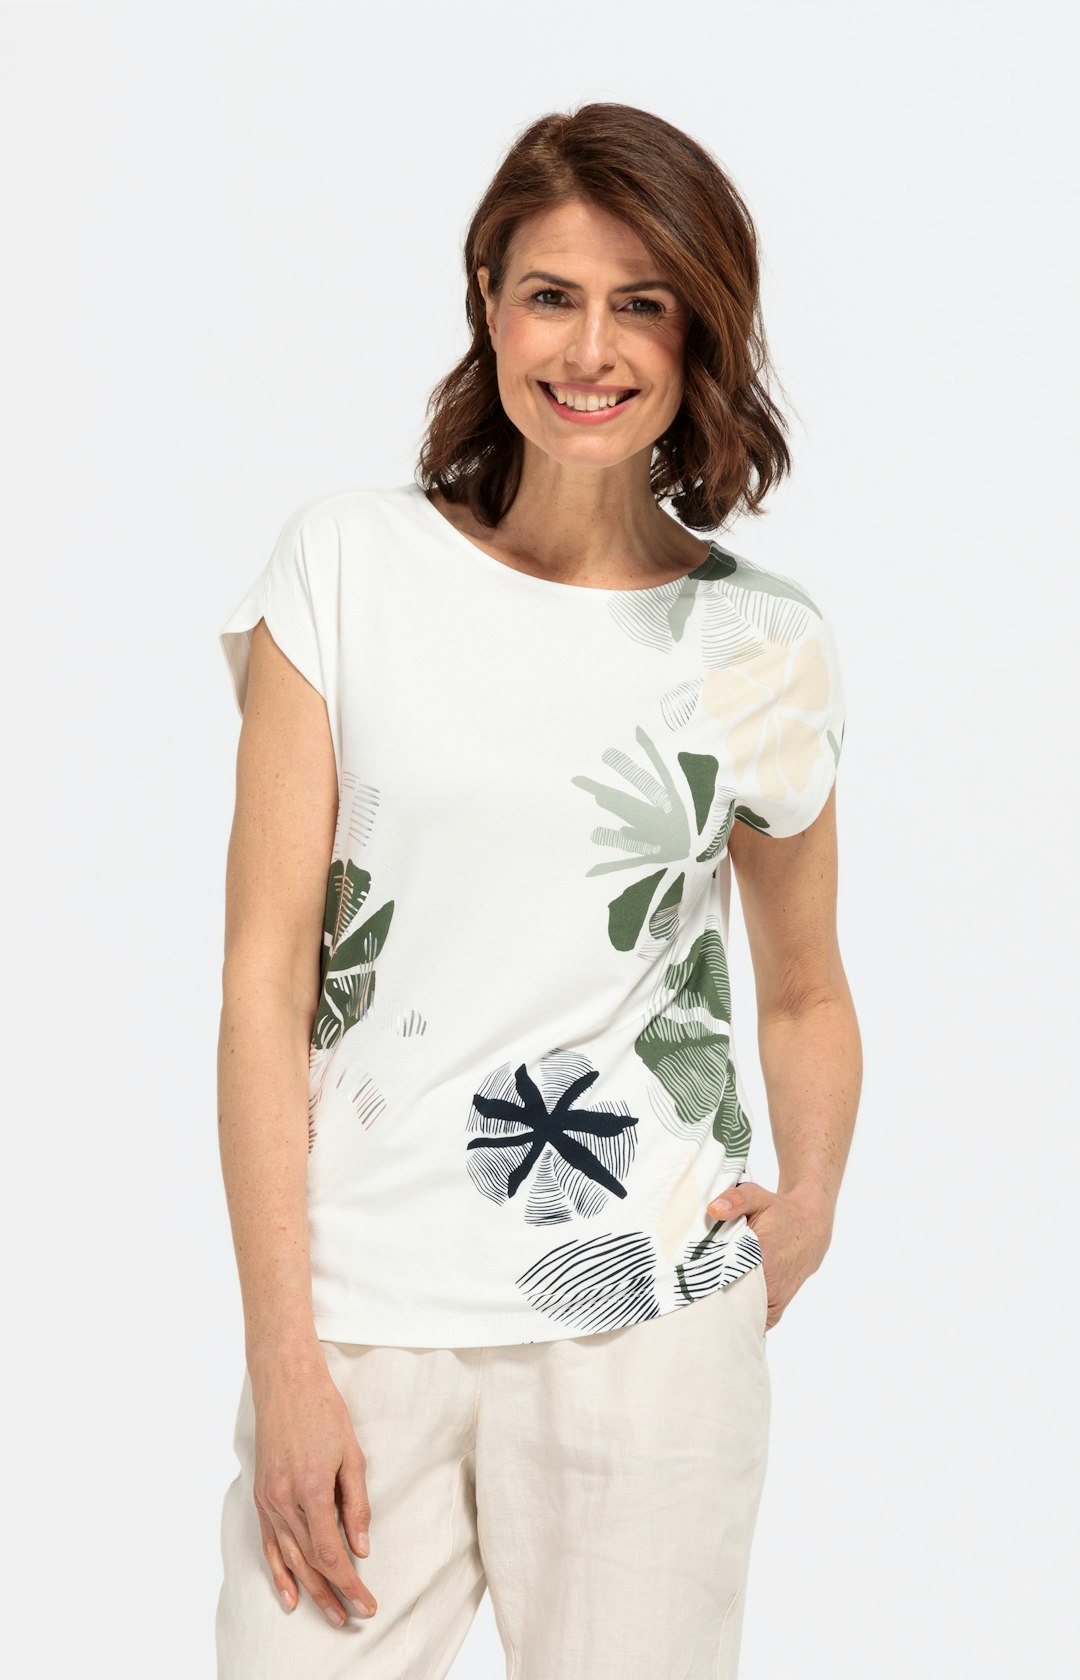 Kurzarm-Shirt mit Blumen-Print